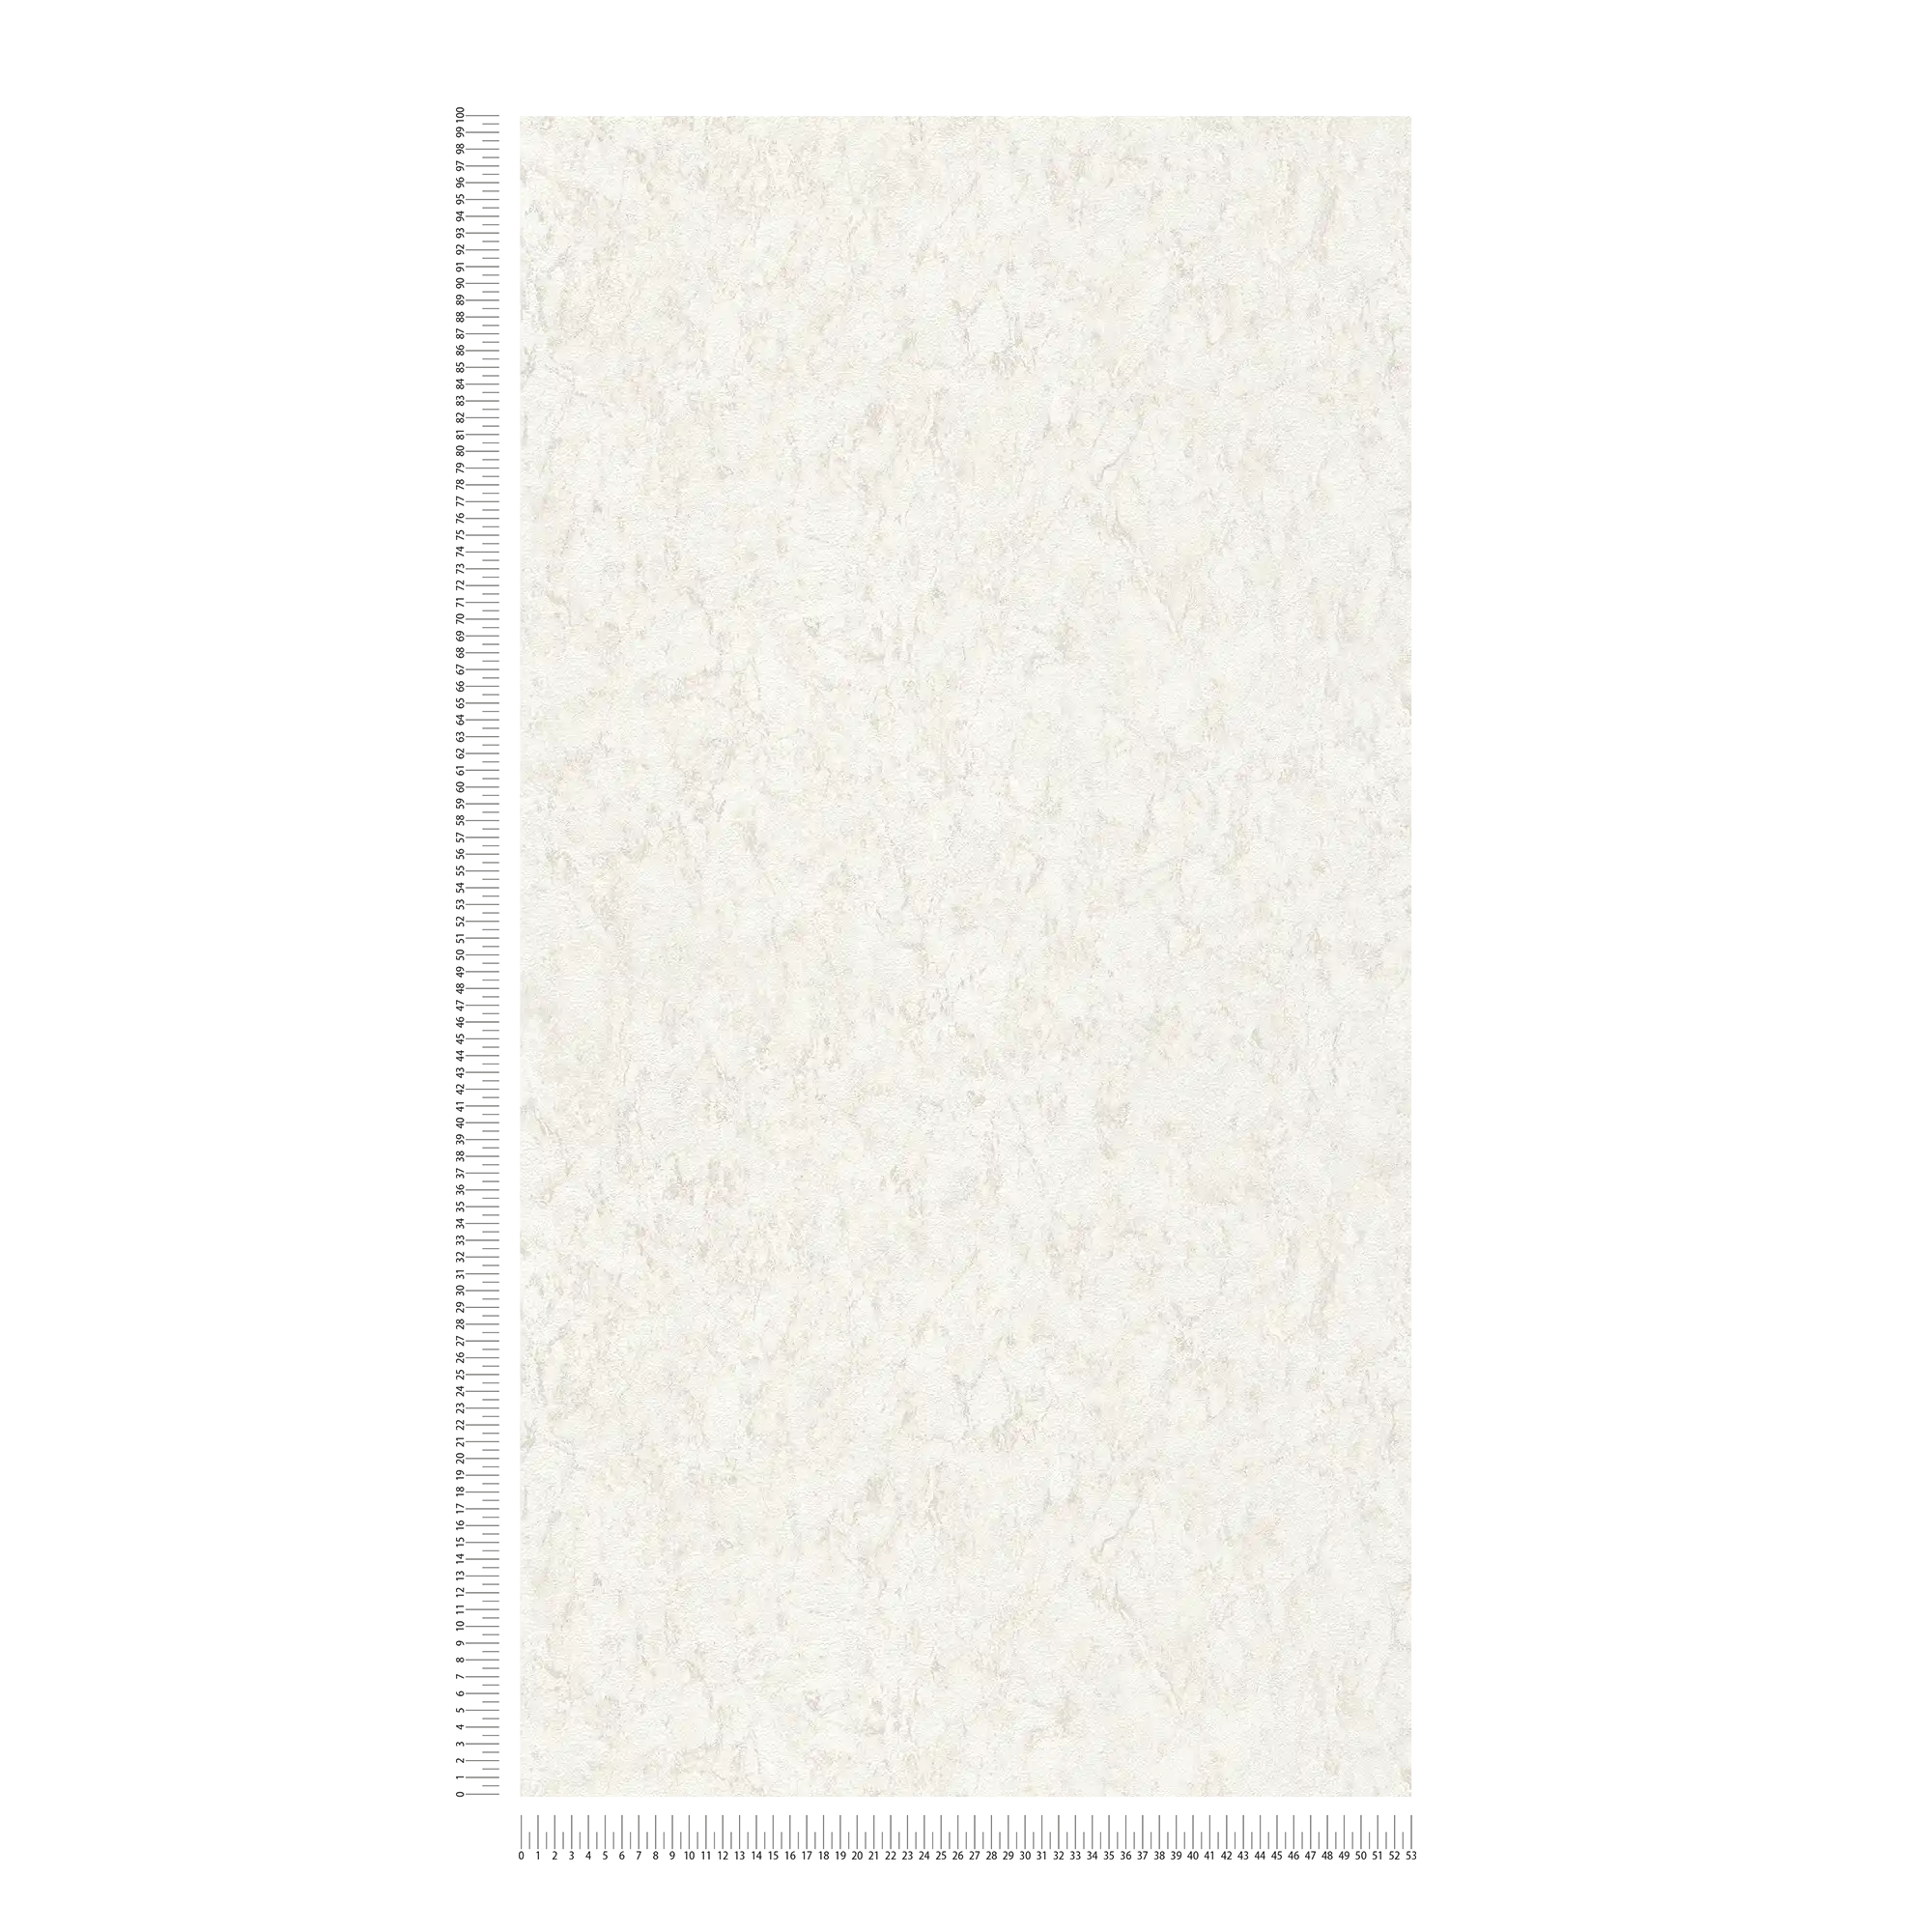             Plain wallpaper with texture effect & mottled design - white, grey
        